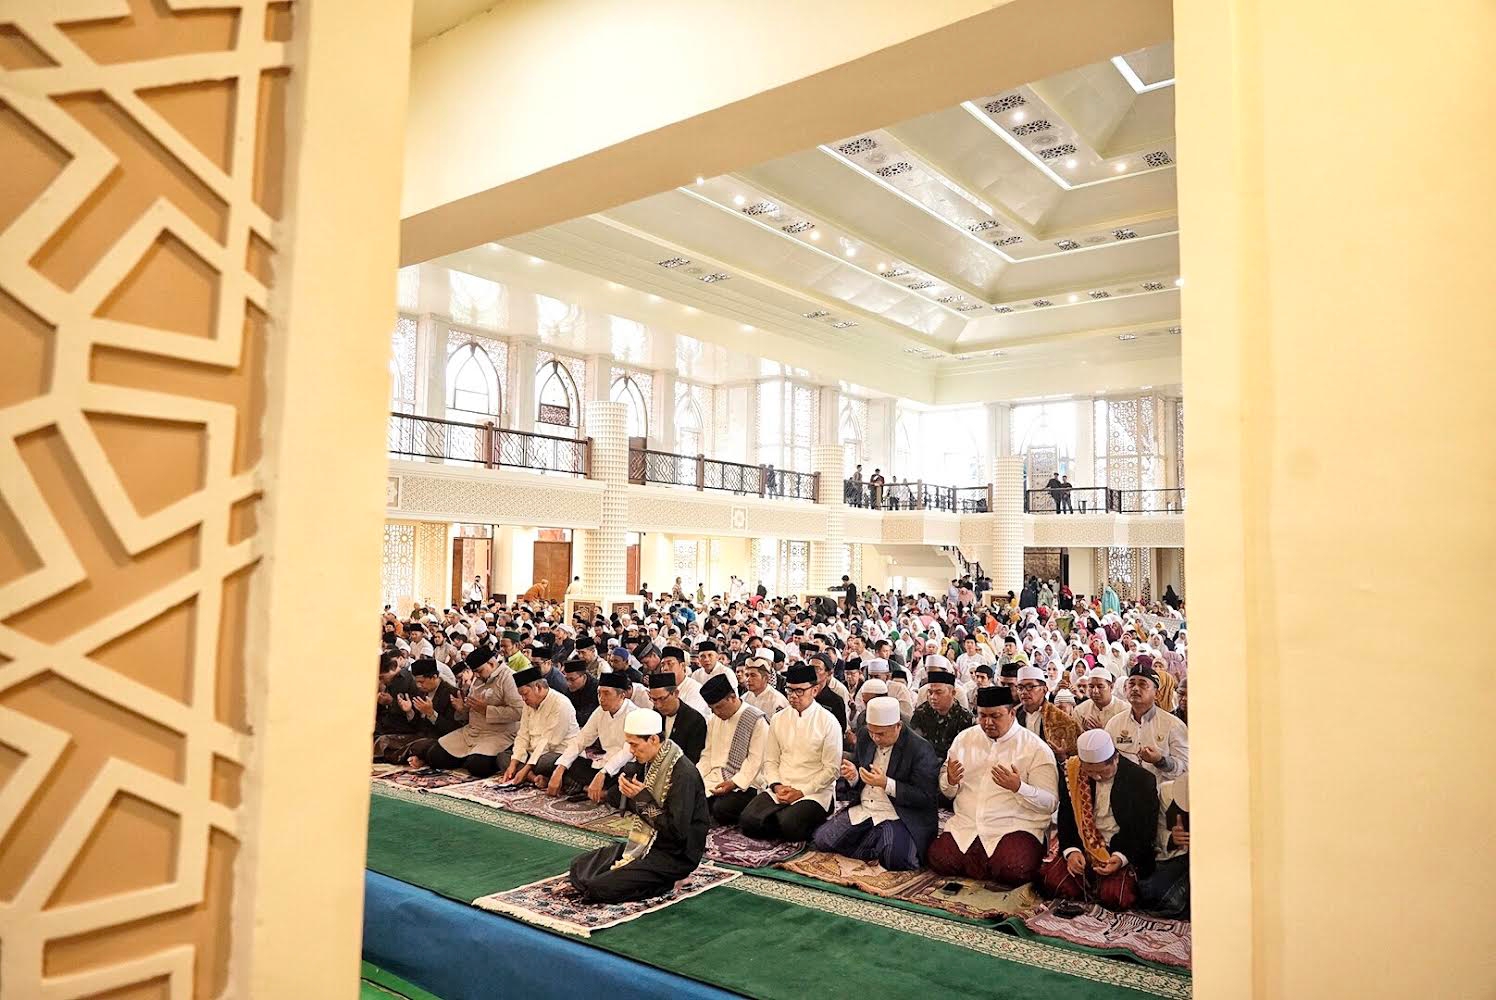 Ratusan jamaah usai melaksanakan sholat di Masjid Agung Kota Bogor. (Yudha Prananda / Jabar Ekspres)